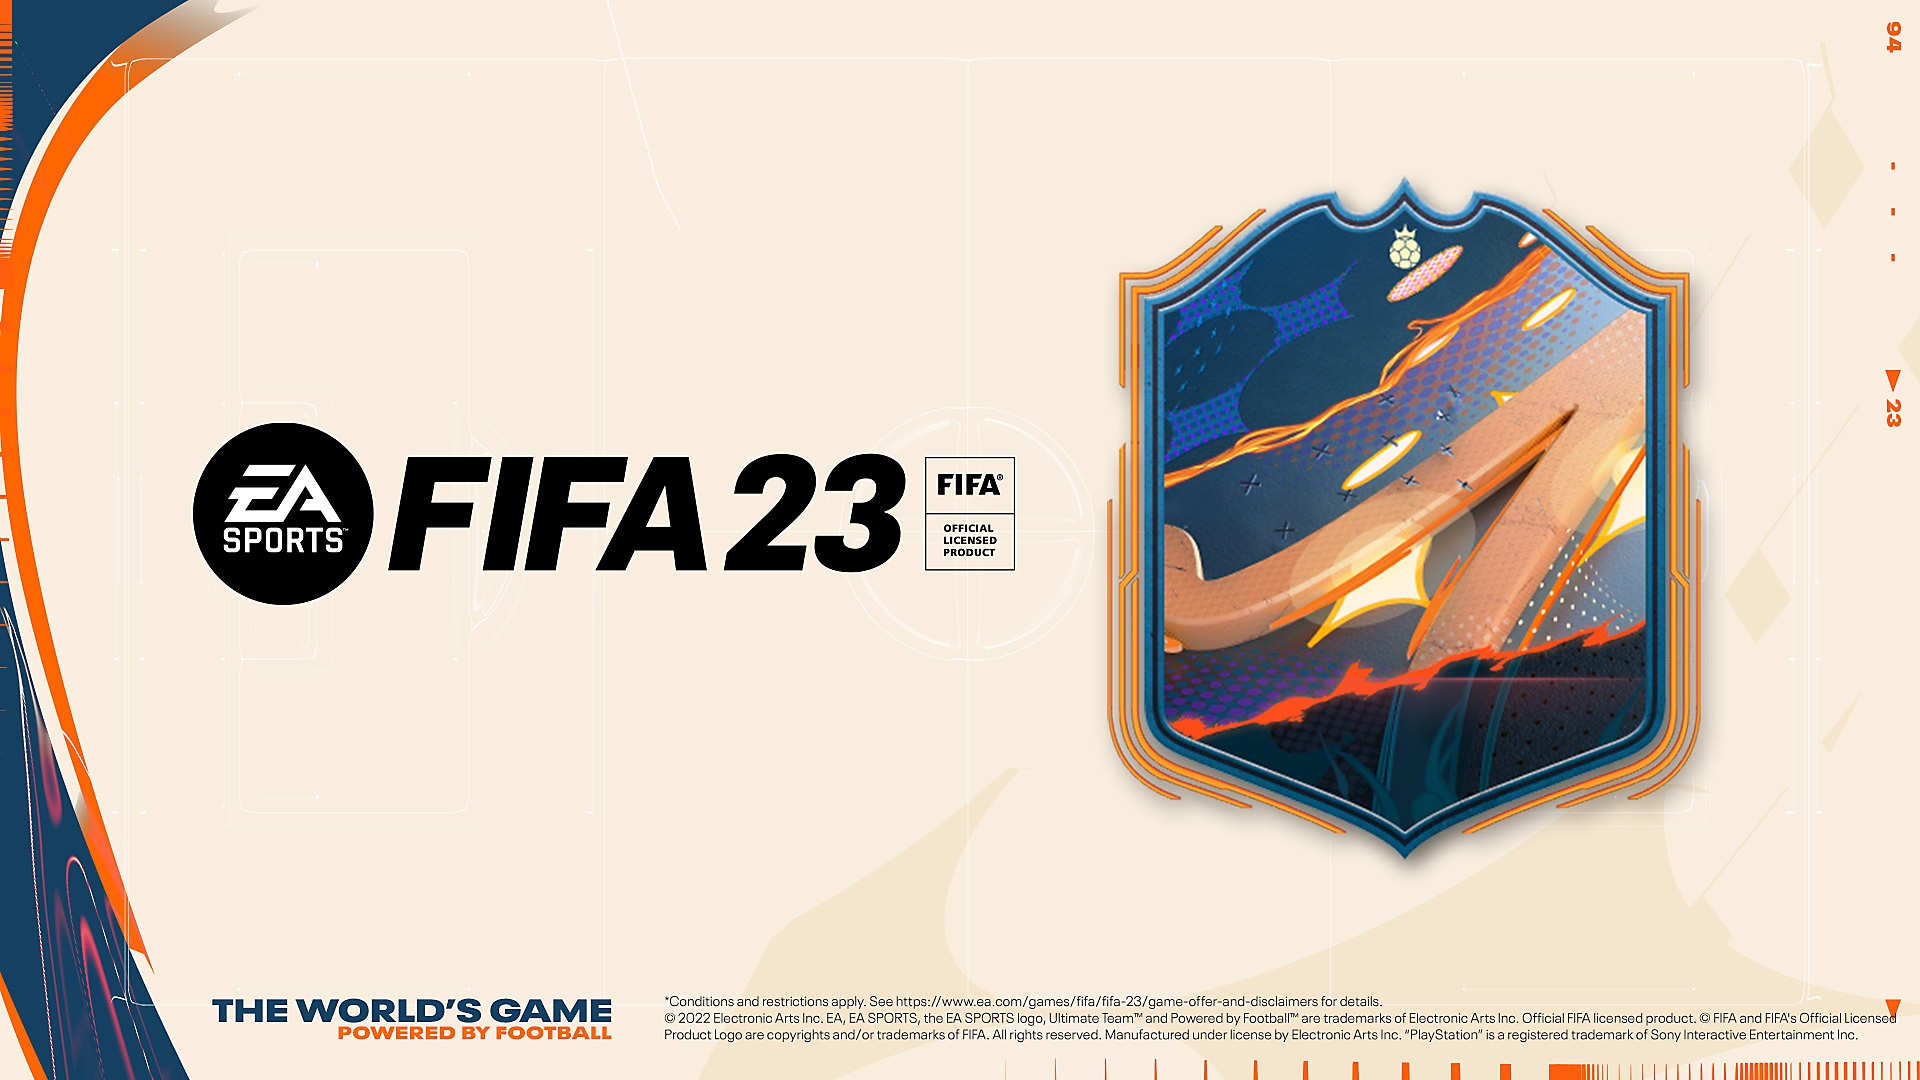 《EA Sports FIFA 23》预订宣传海报，显示的是彩色队徽和《FIFA 23》徽标